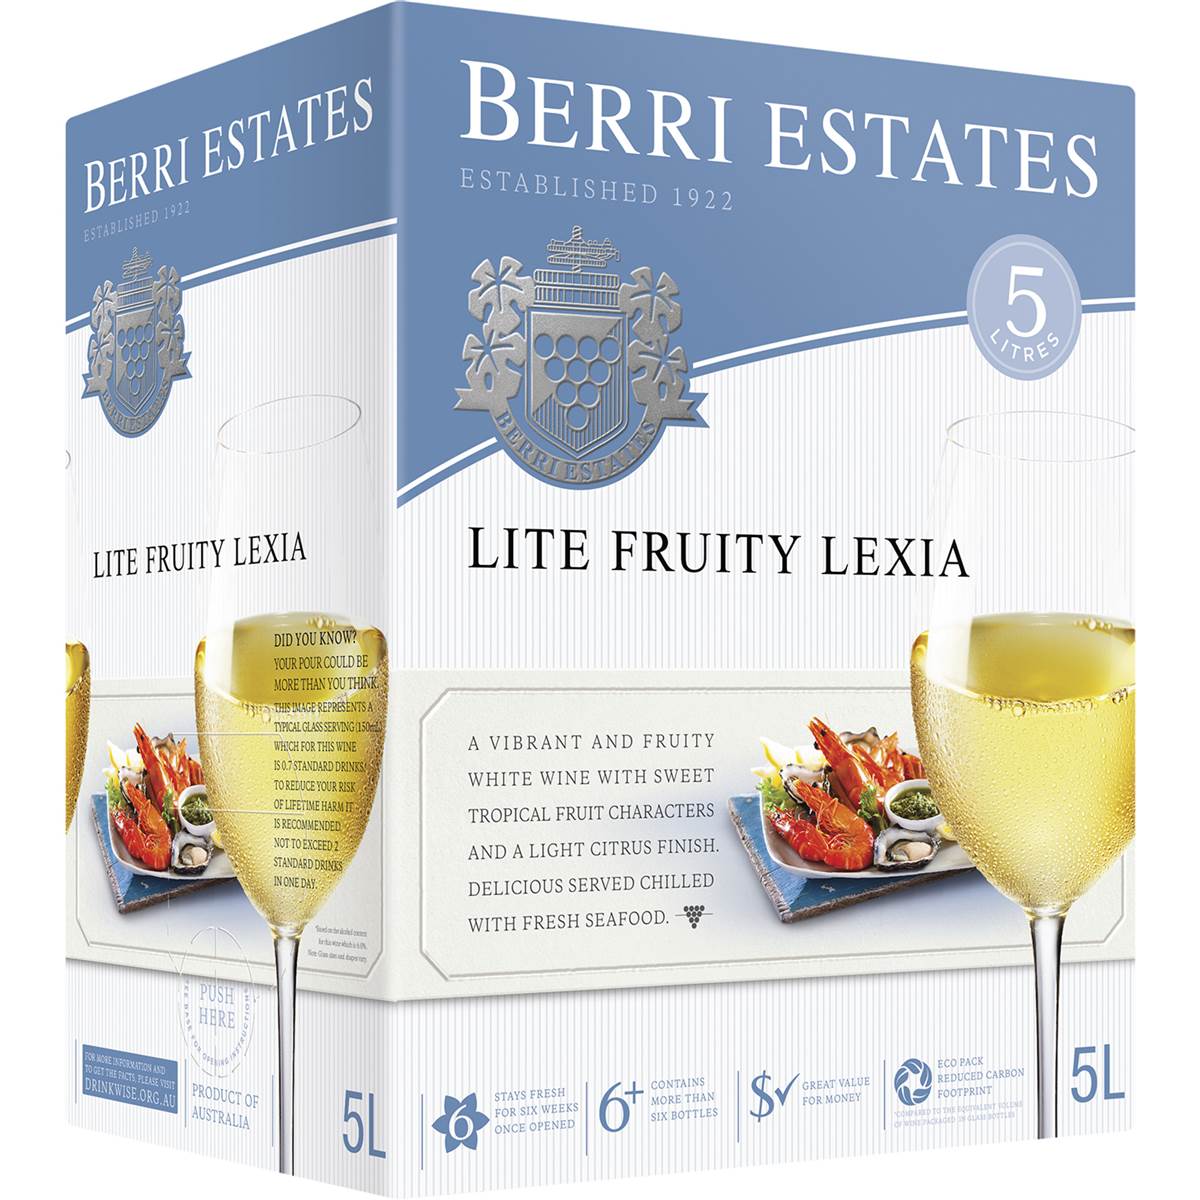 Calories in Berri Estates Cask Wine Lite Fruity Lexia